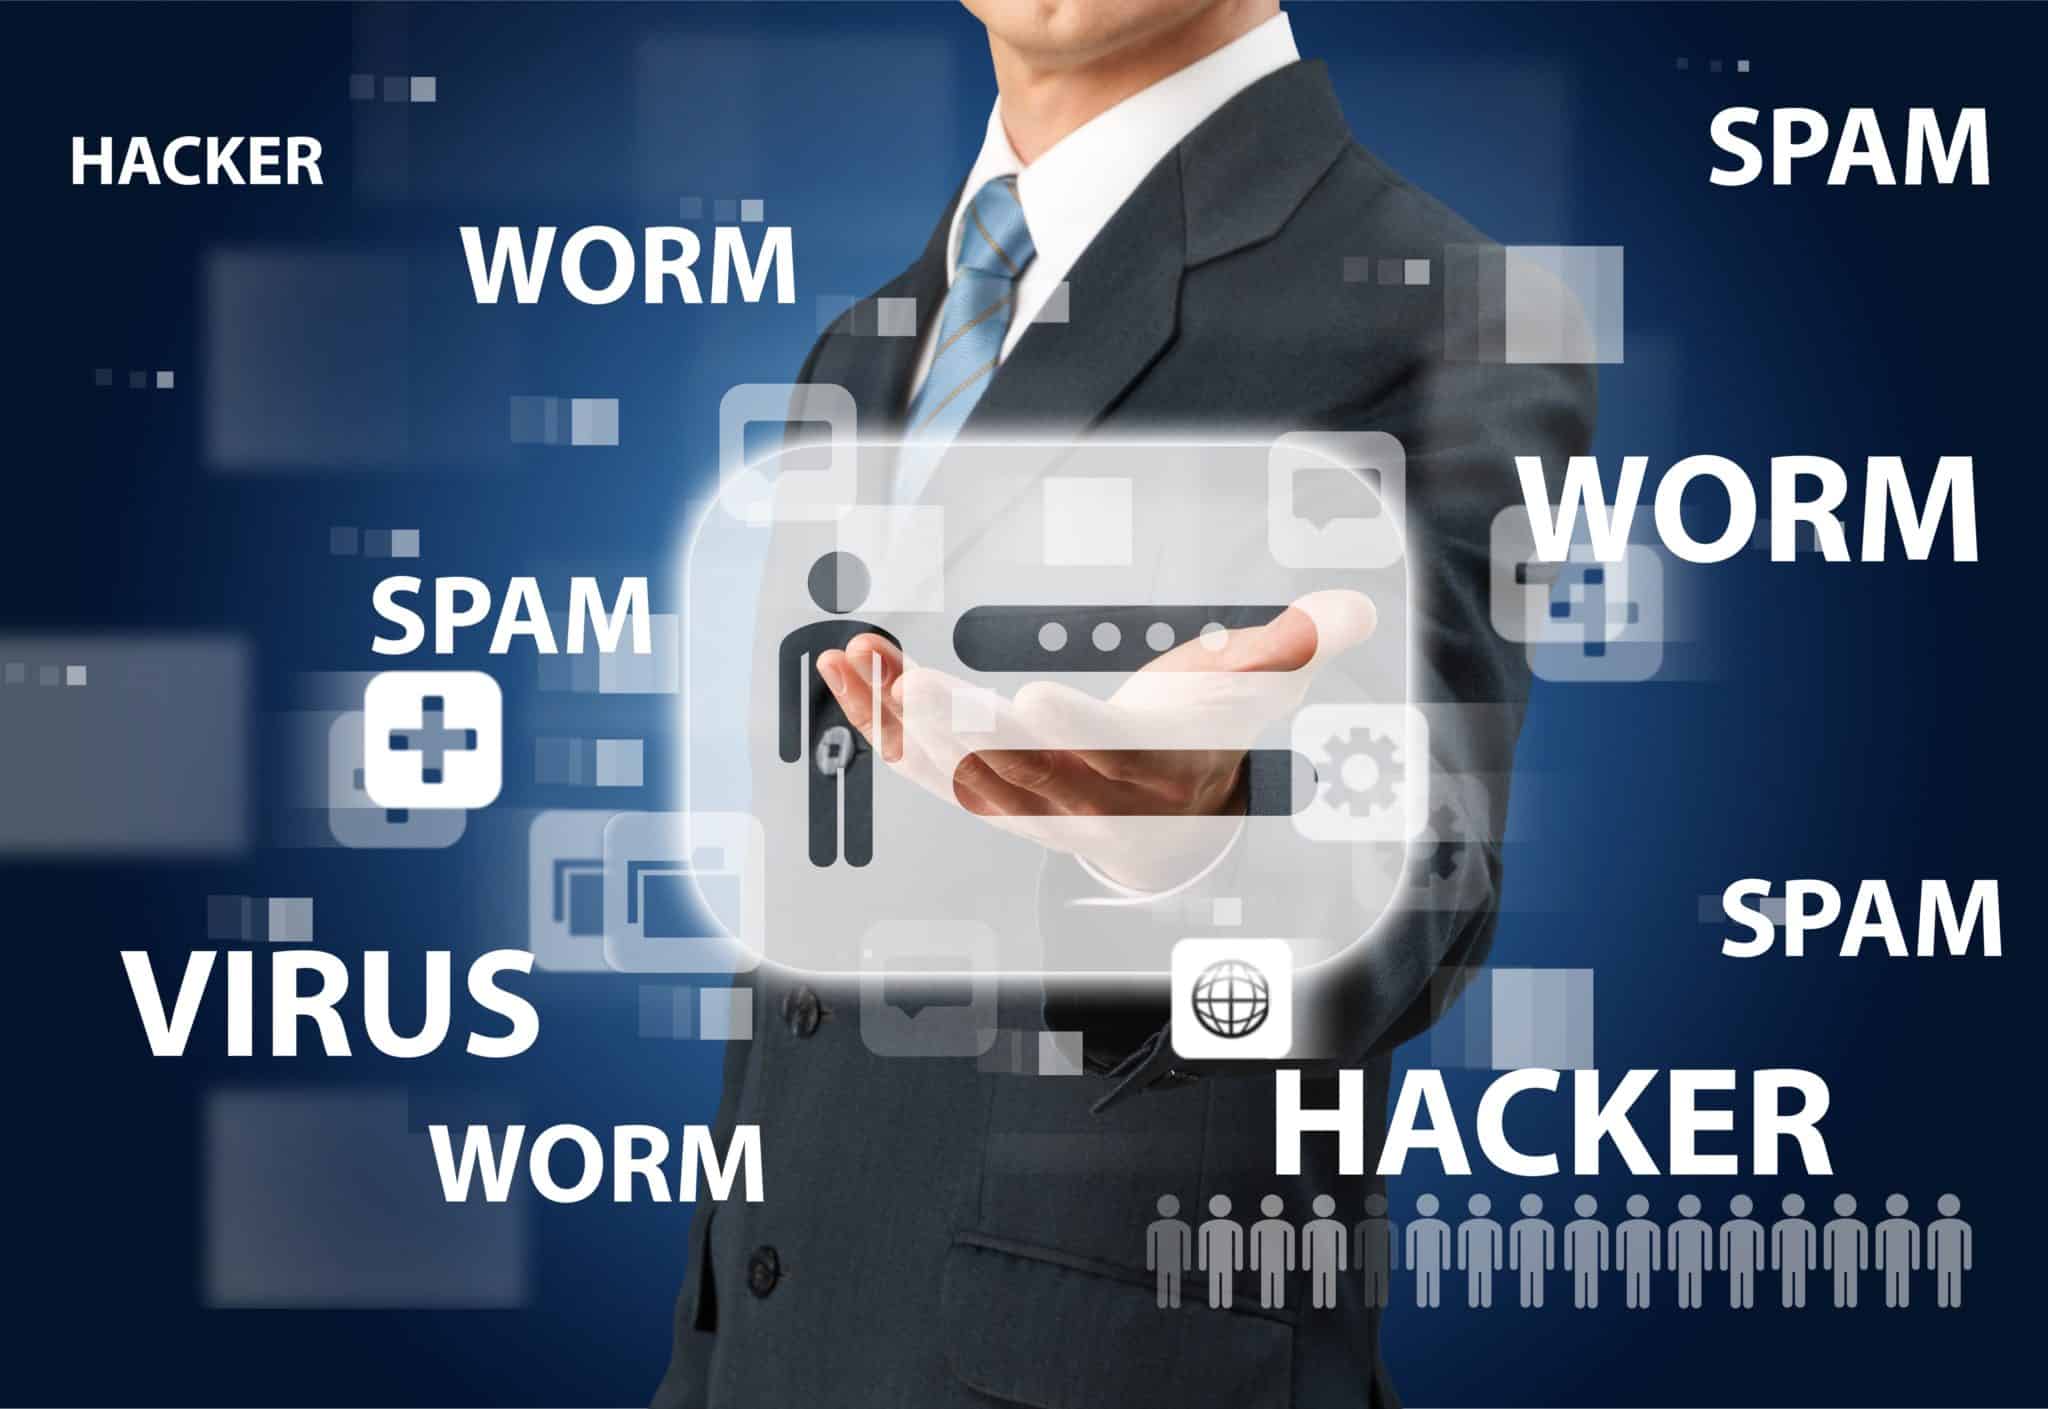 Data hacker virus worm spam